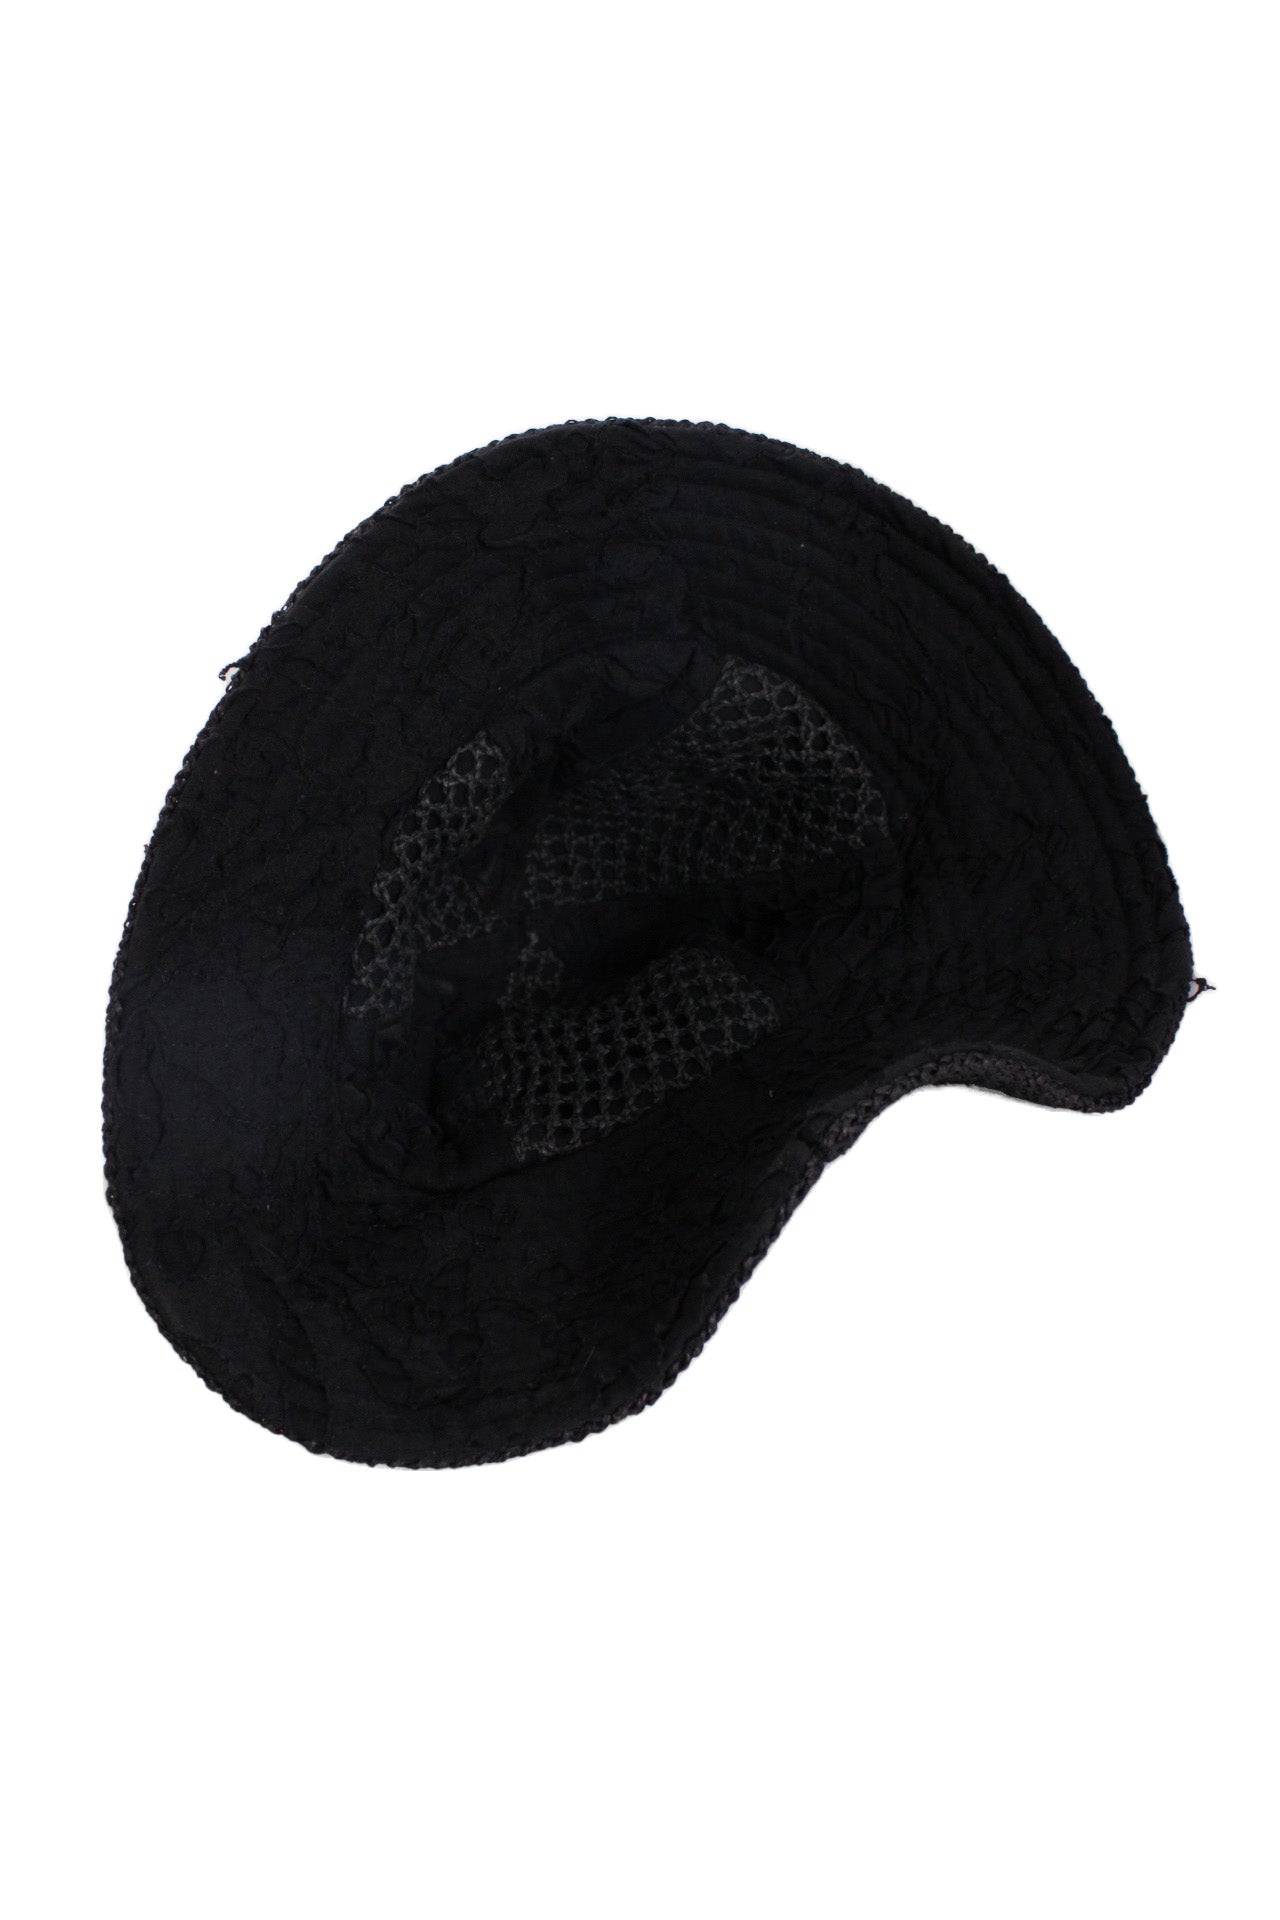 underside/lining of hat